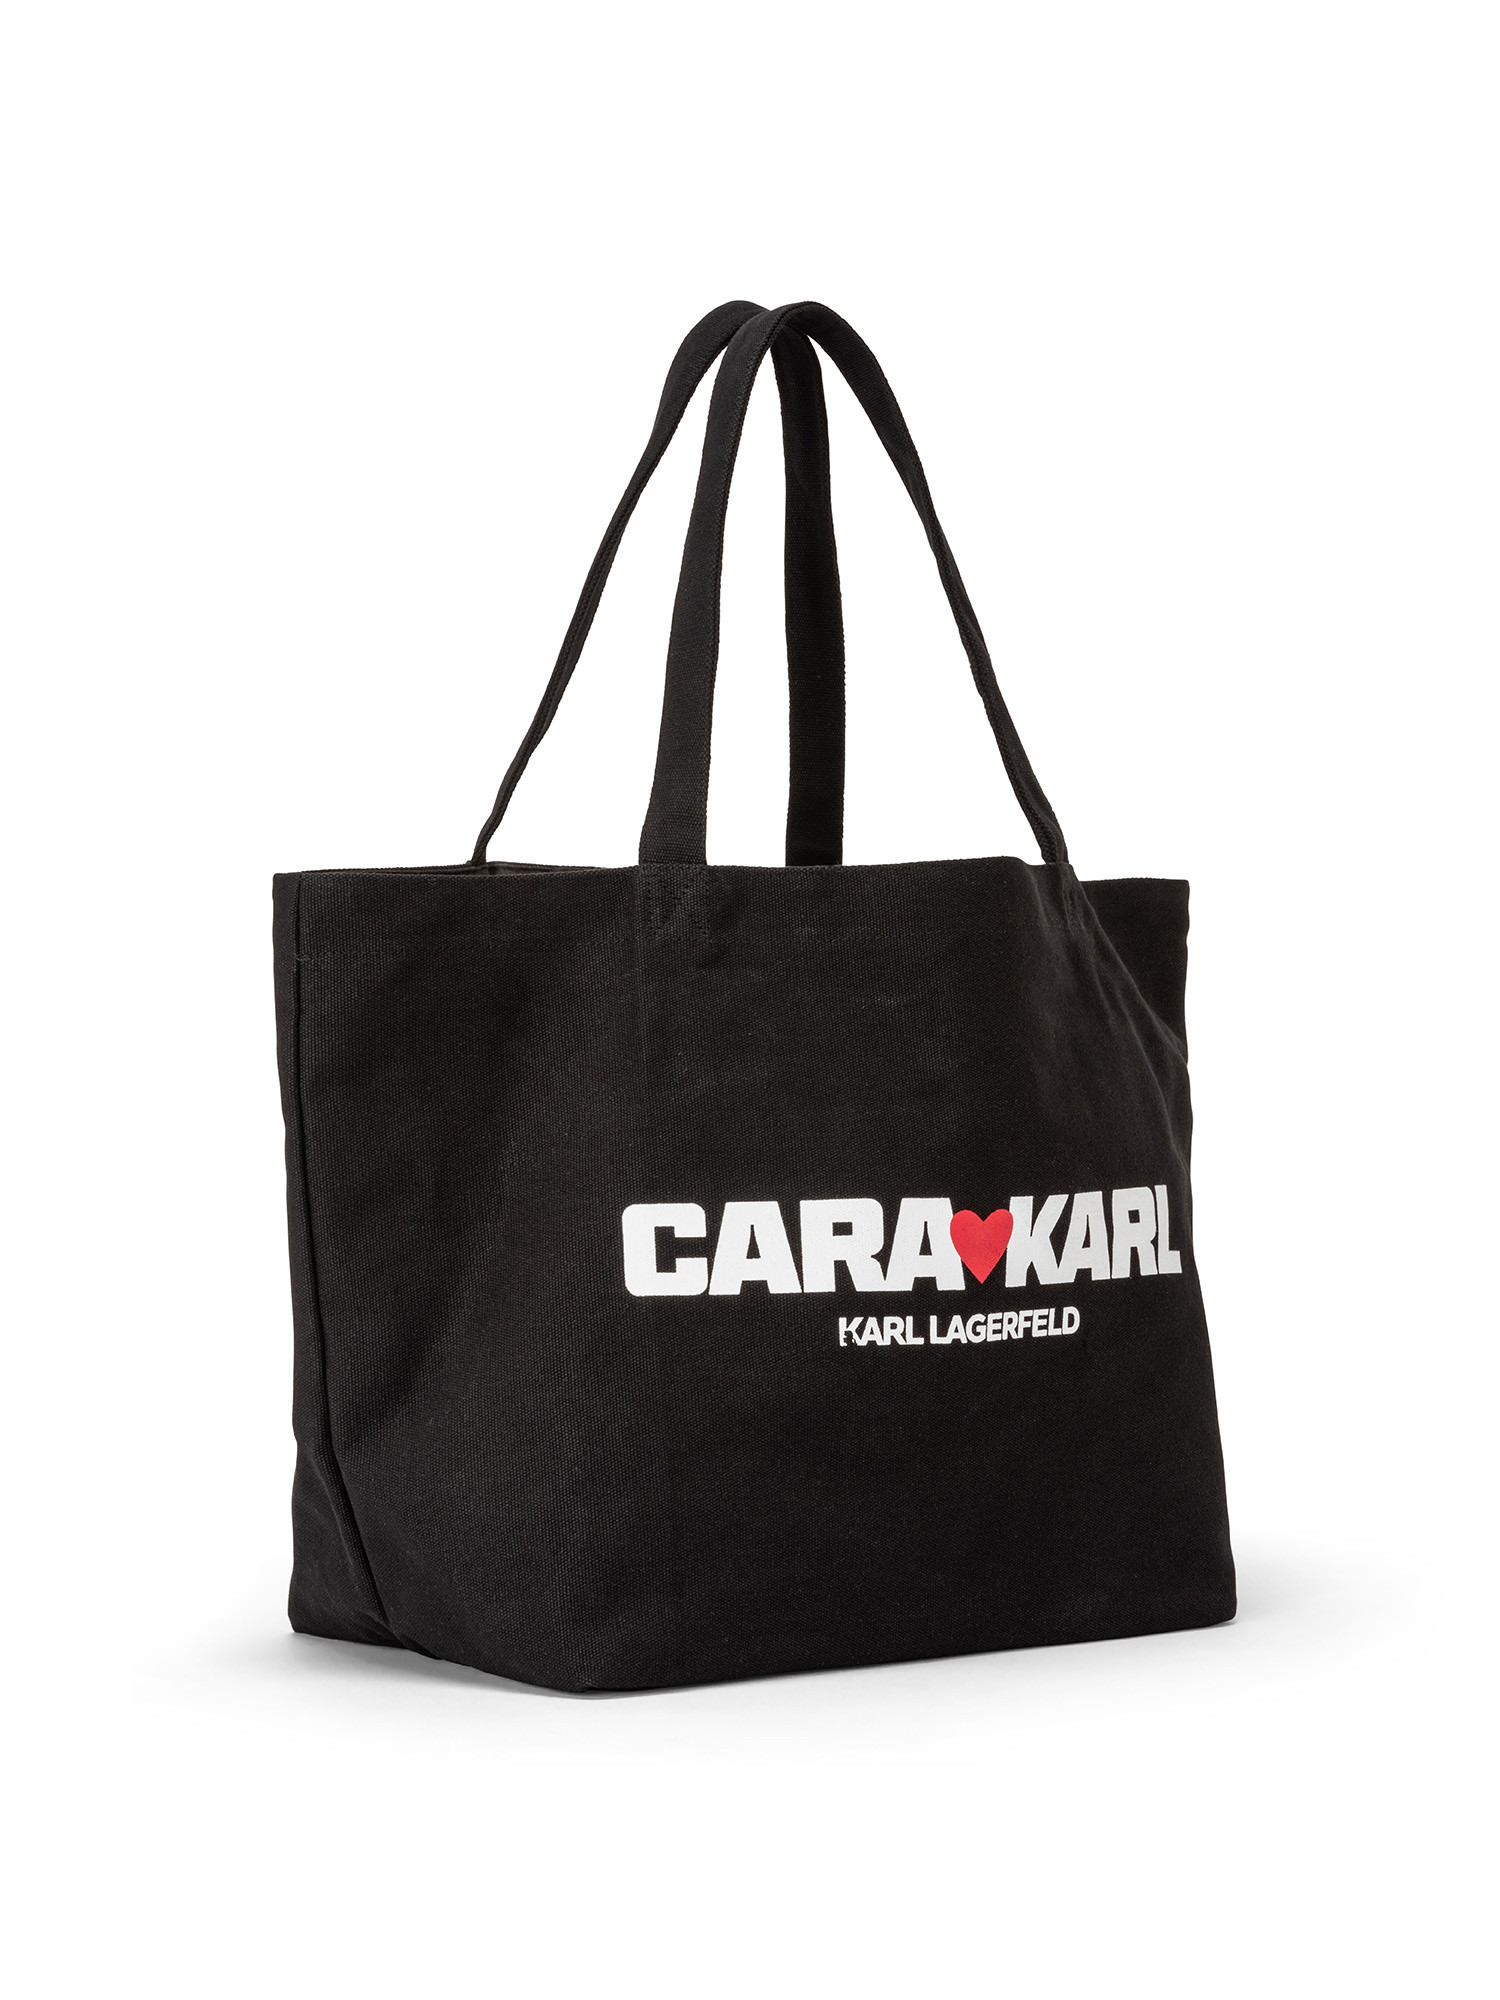 Karl Lagerfeld - Cara loves karl shopper in tela, Black, large image number 1